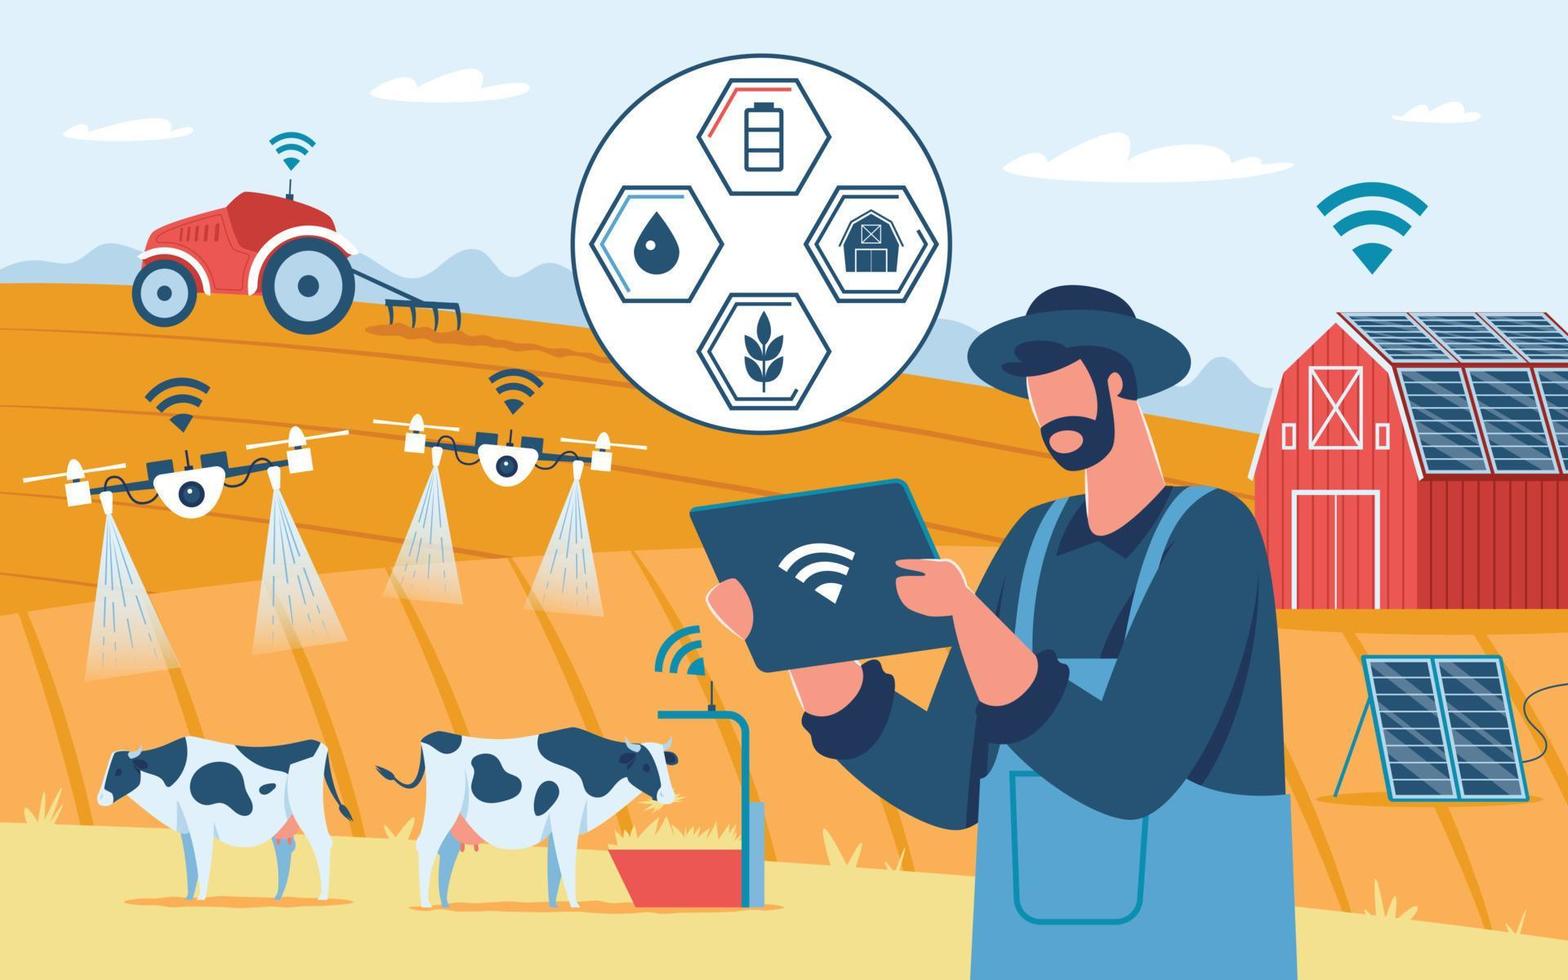 inteligente agricultura, innovador agricultura tecnología, agrícola drones ecológico solar motorizado granja, agricultura automatización vector ilustración